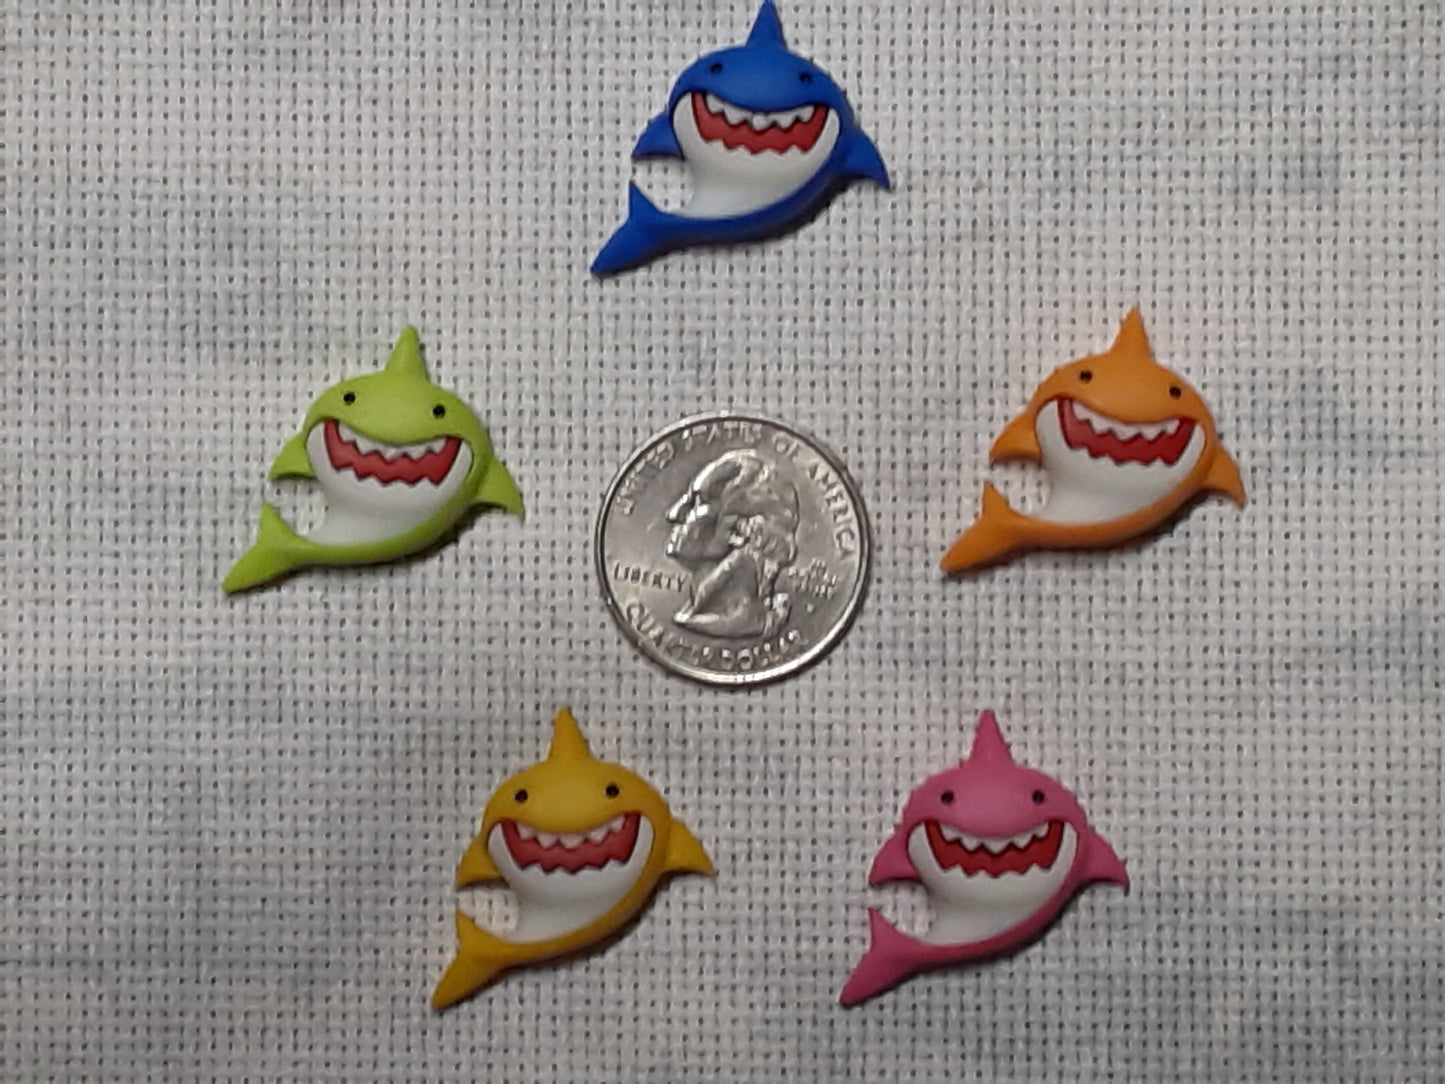 Jaw-some shark needle minders